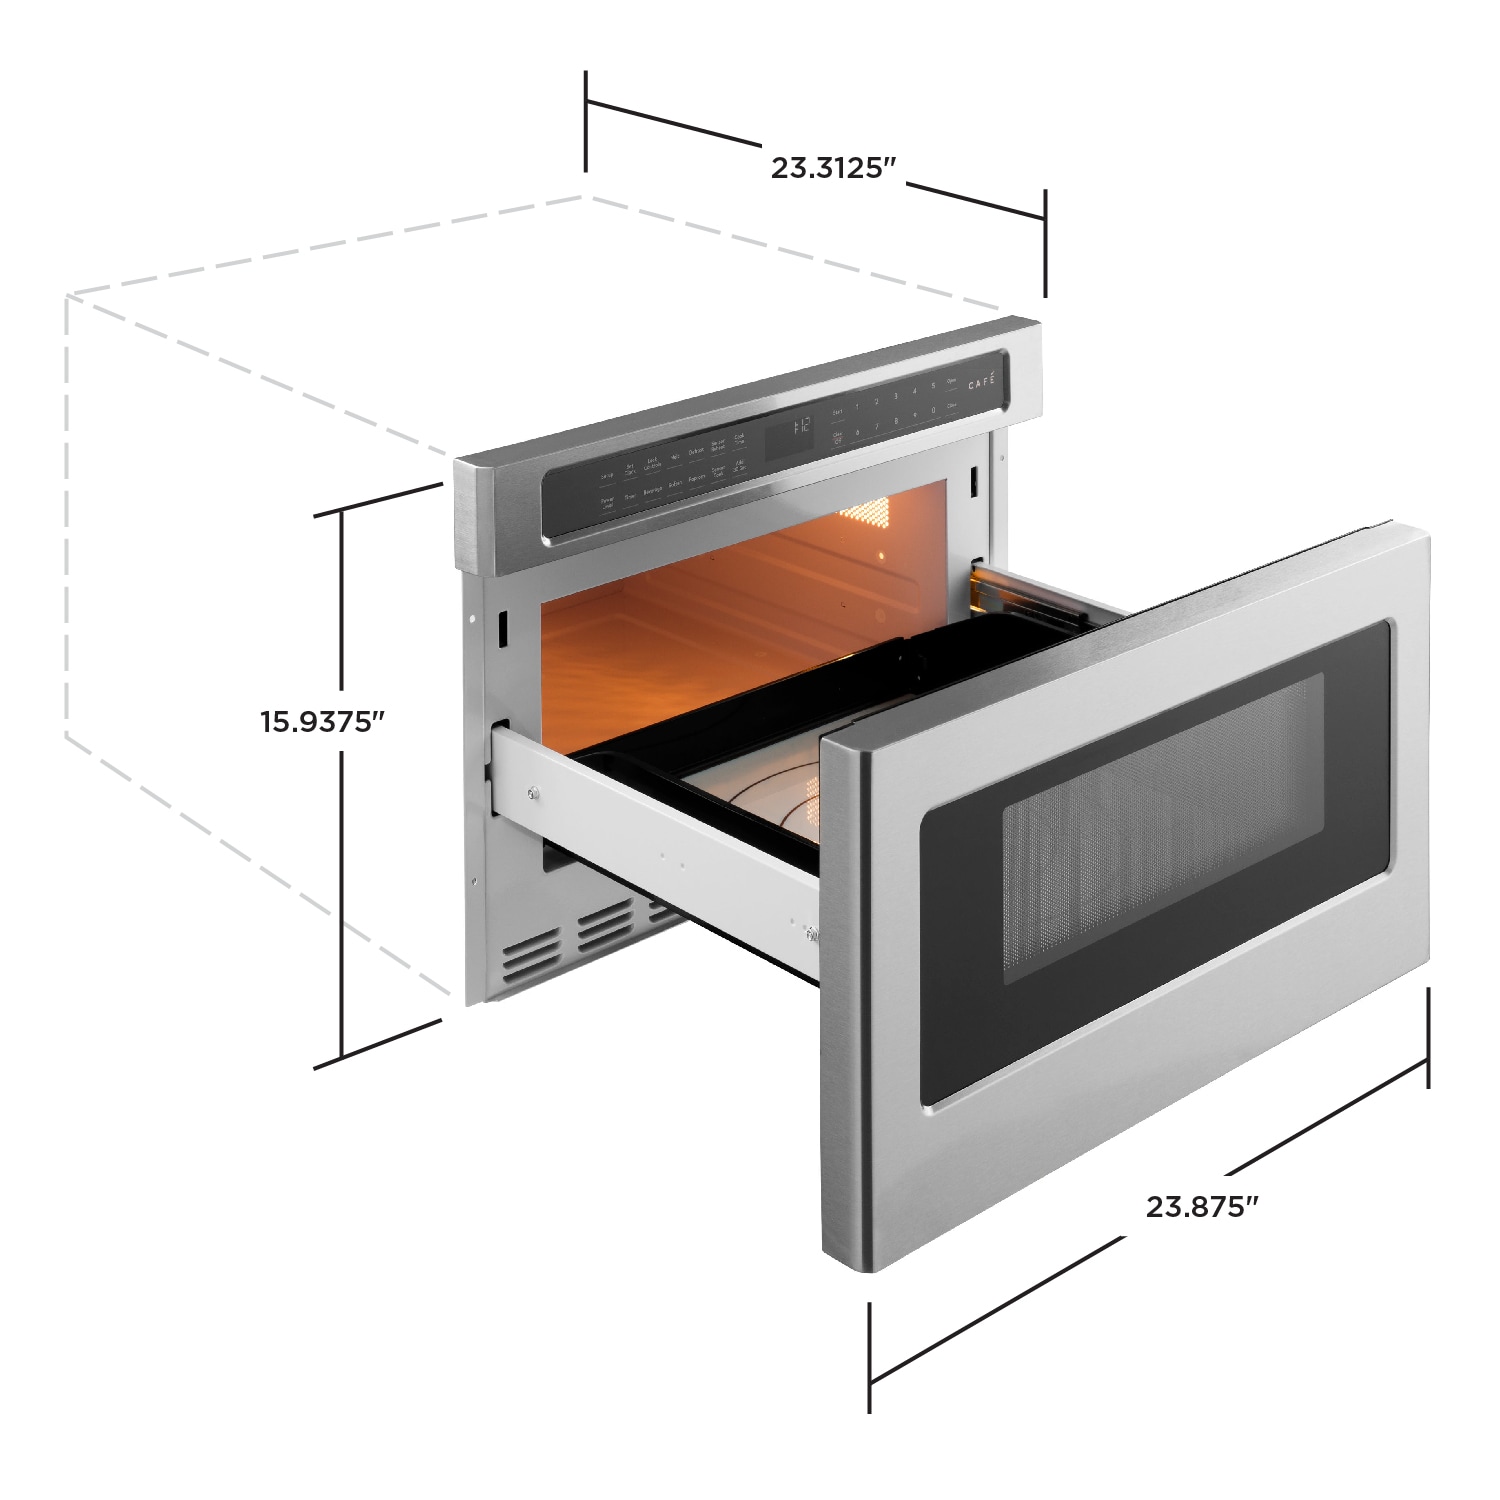 Café™ Built-In Microwave Drawer Oven - CWL112P2RS1 - Cafe Appliances